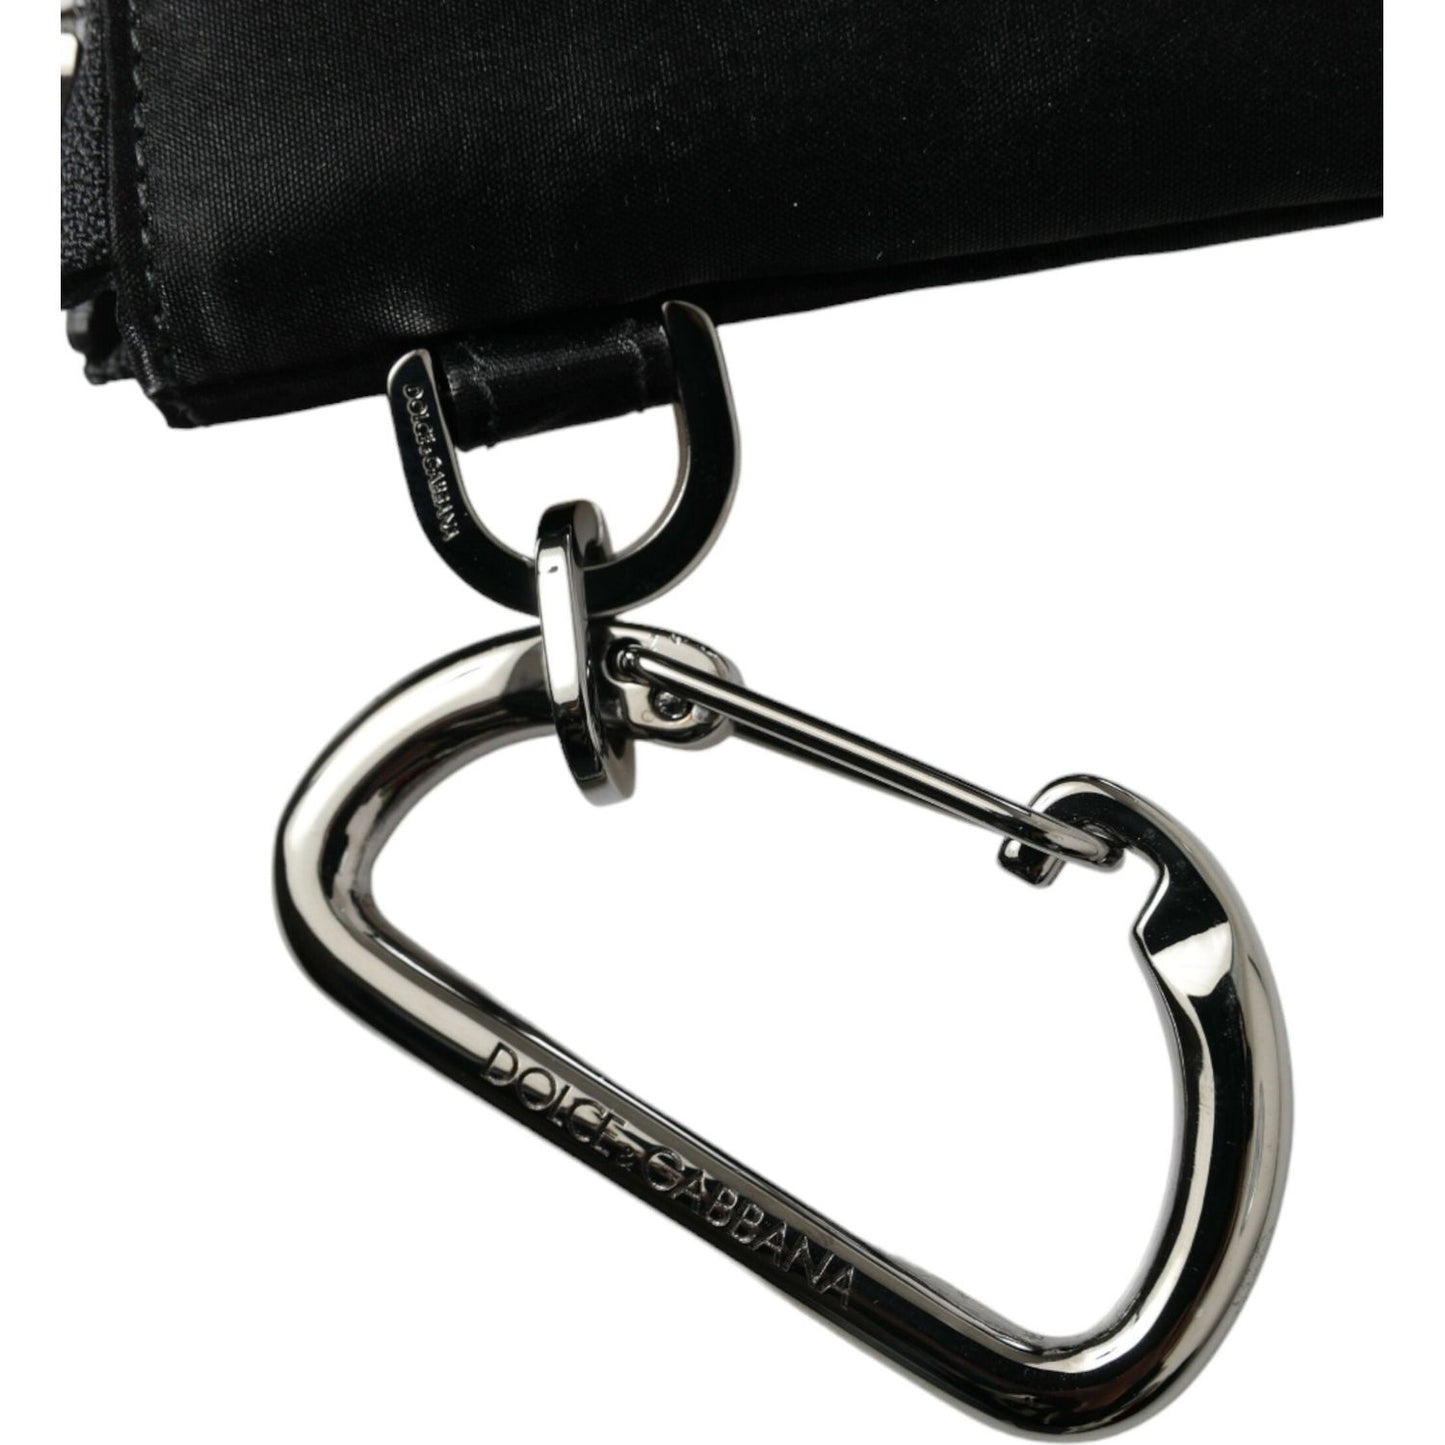 Dolce & GabbanaElite Black Nylon & Leather Pouch with Logo DetailMcRichard Designer Brands£309.00